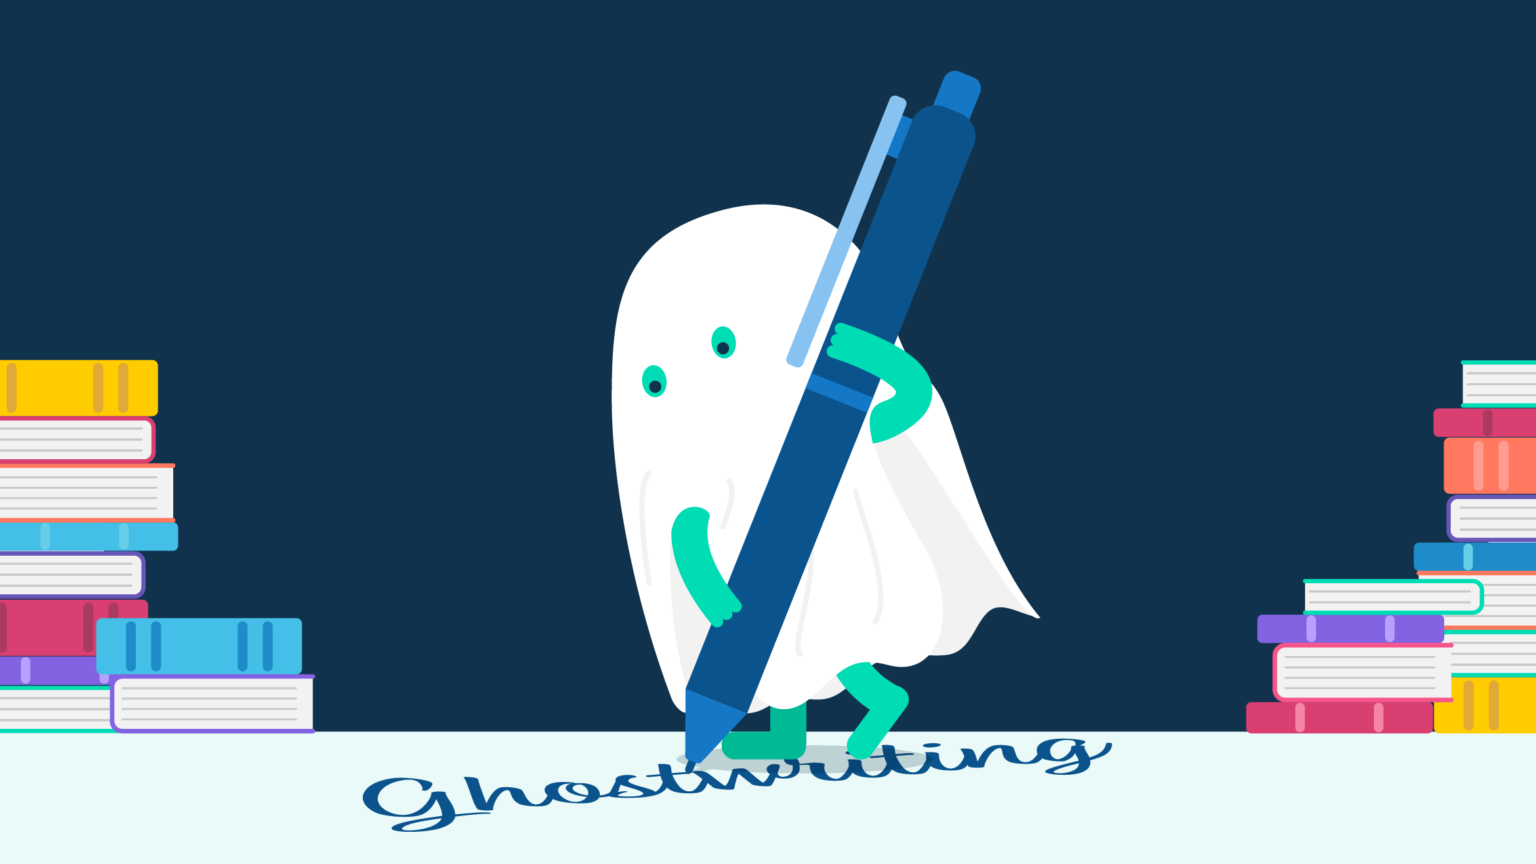 ghostwriting - studysmarter magazine